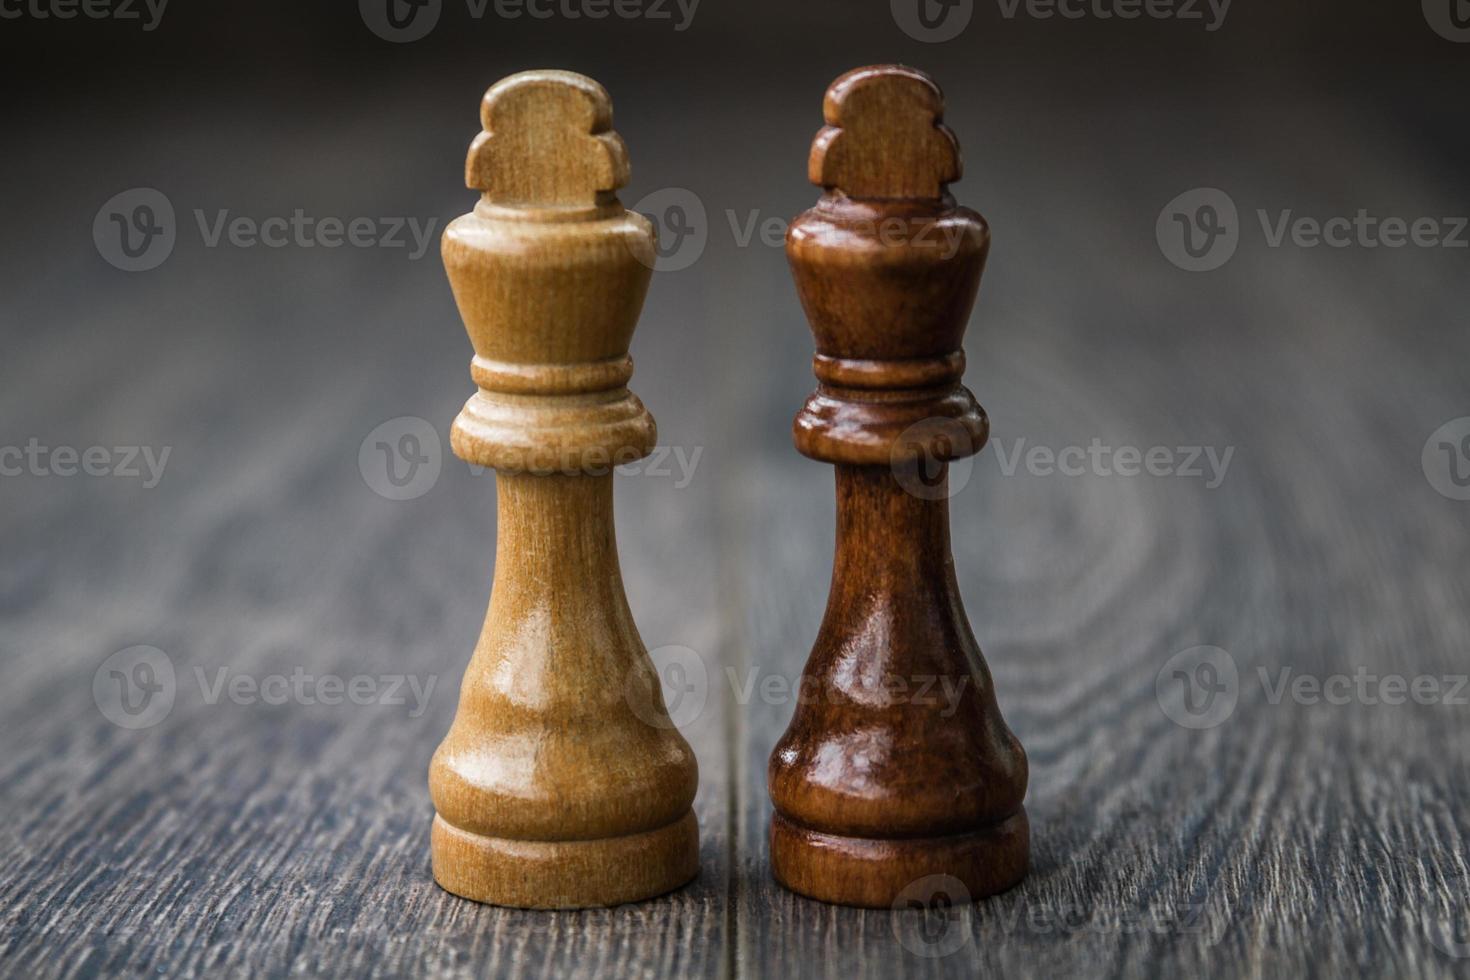 peças de xadrez de madeira 2037591 Foto de stock no Vecteezy